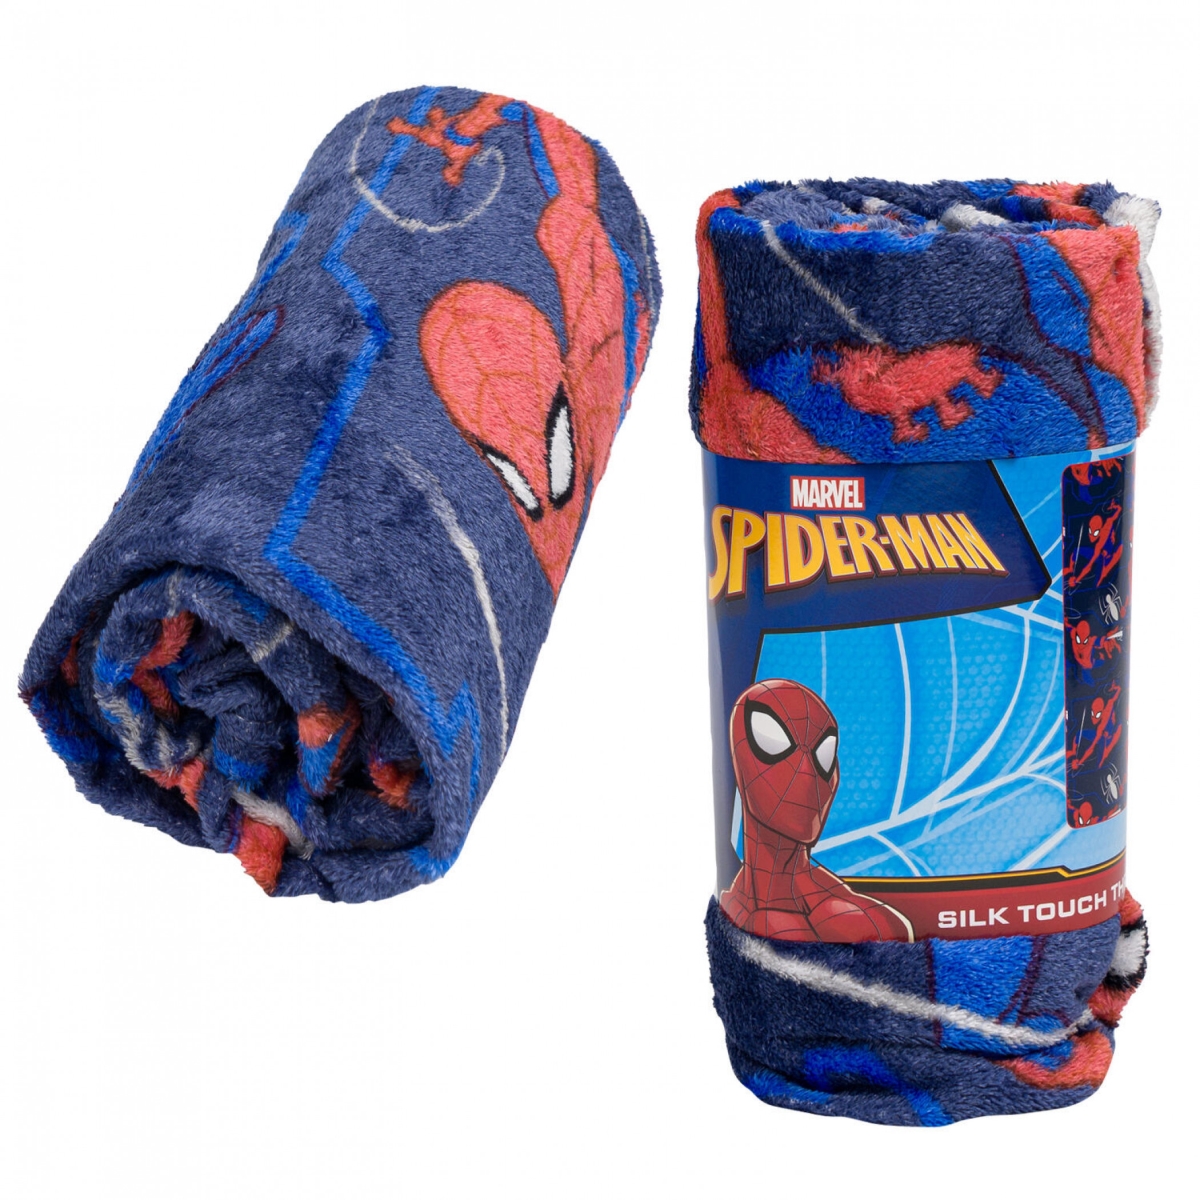 Picture of Spider-Man 875764 40 x 50 in. Spider-Man Web Collage Silk Touch Throw Blanket&#44; Blue